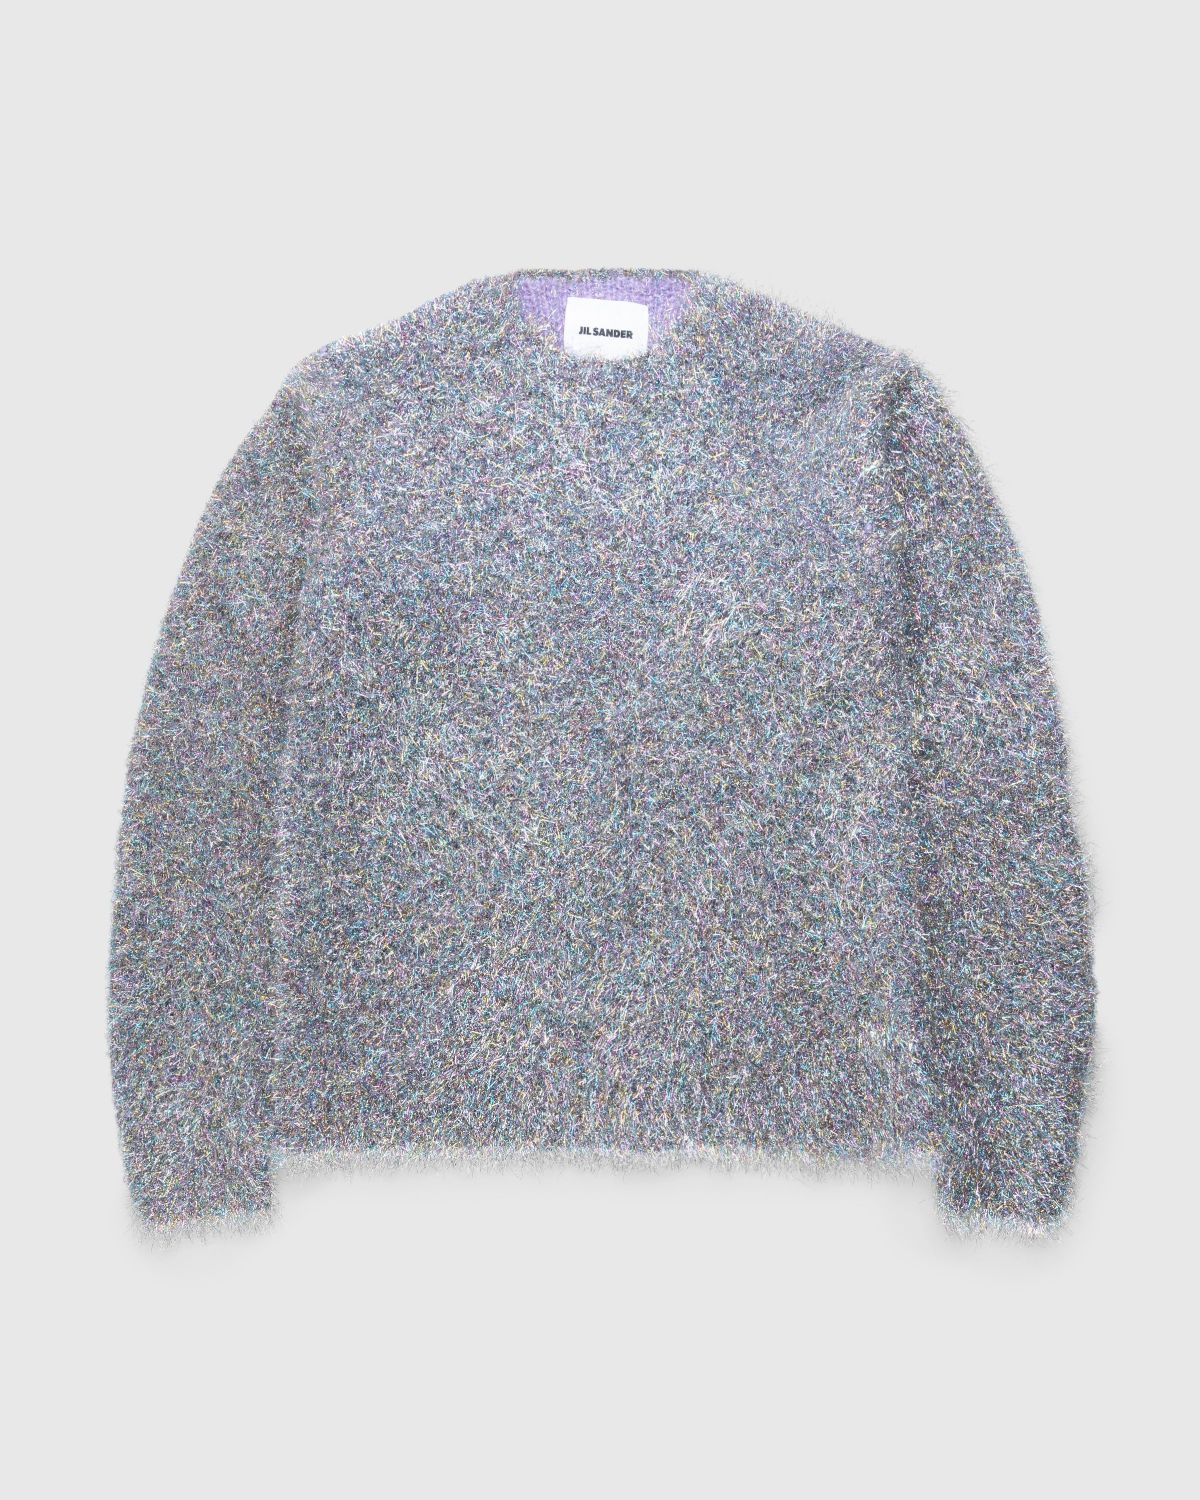 Jil Sander – Metallic Mohair Blend Sweater Multi